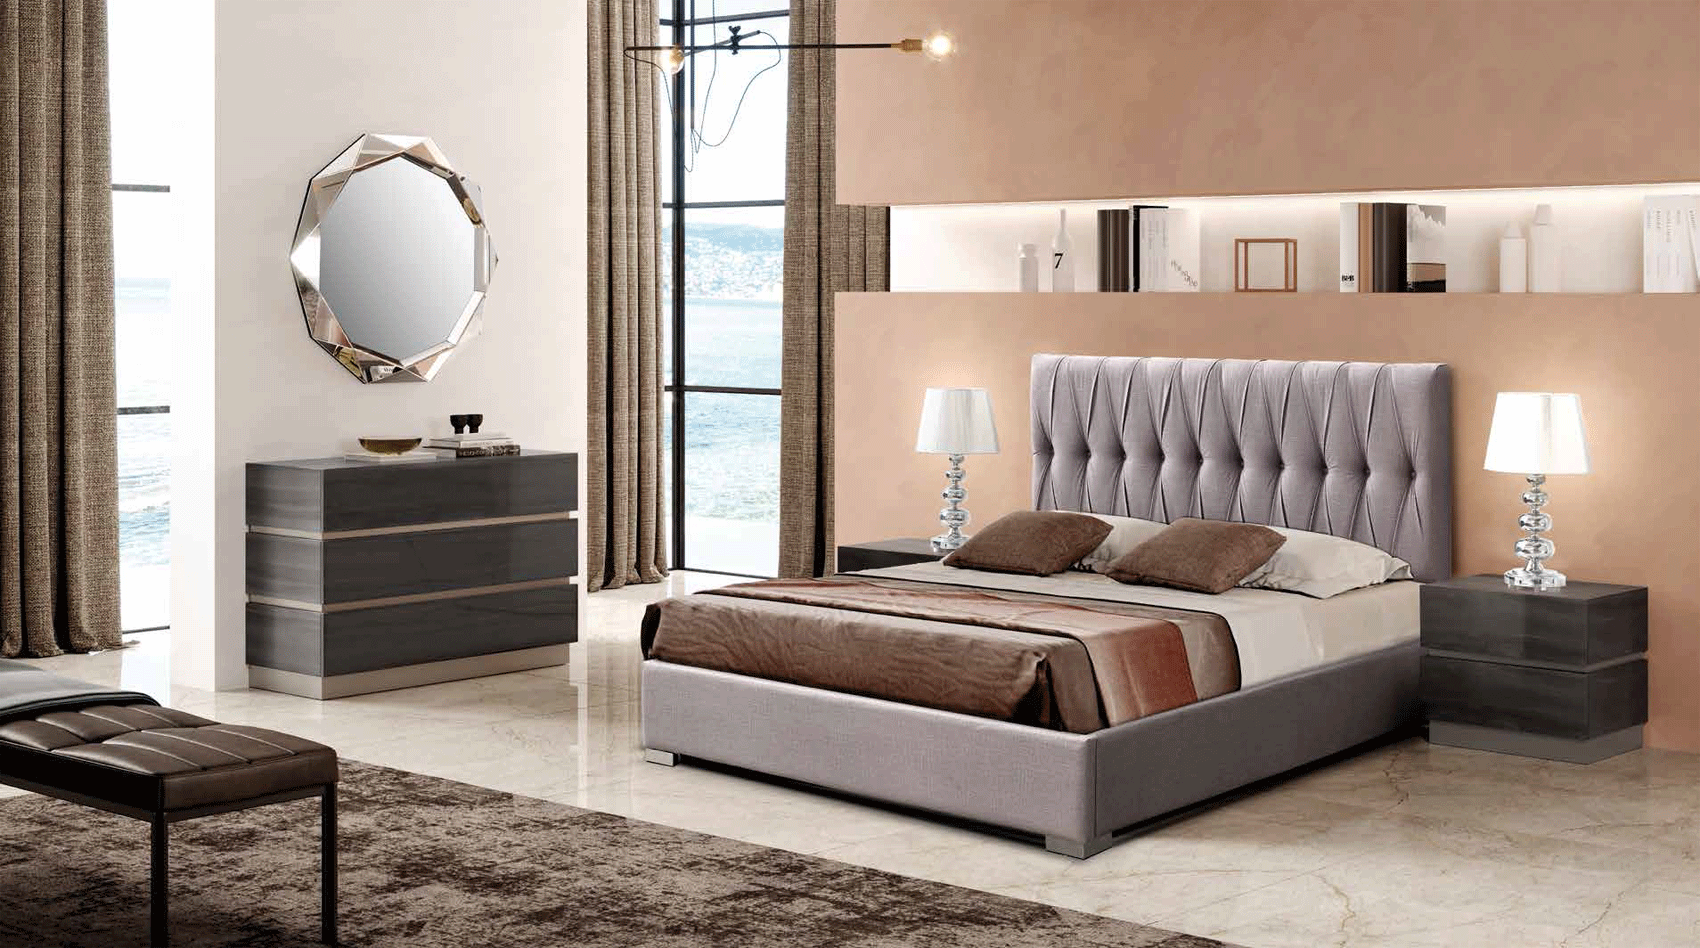 Bedroom Furniture Mirrors 401 Mulan, M-151, C-151, E-413, YP440-N